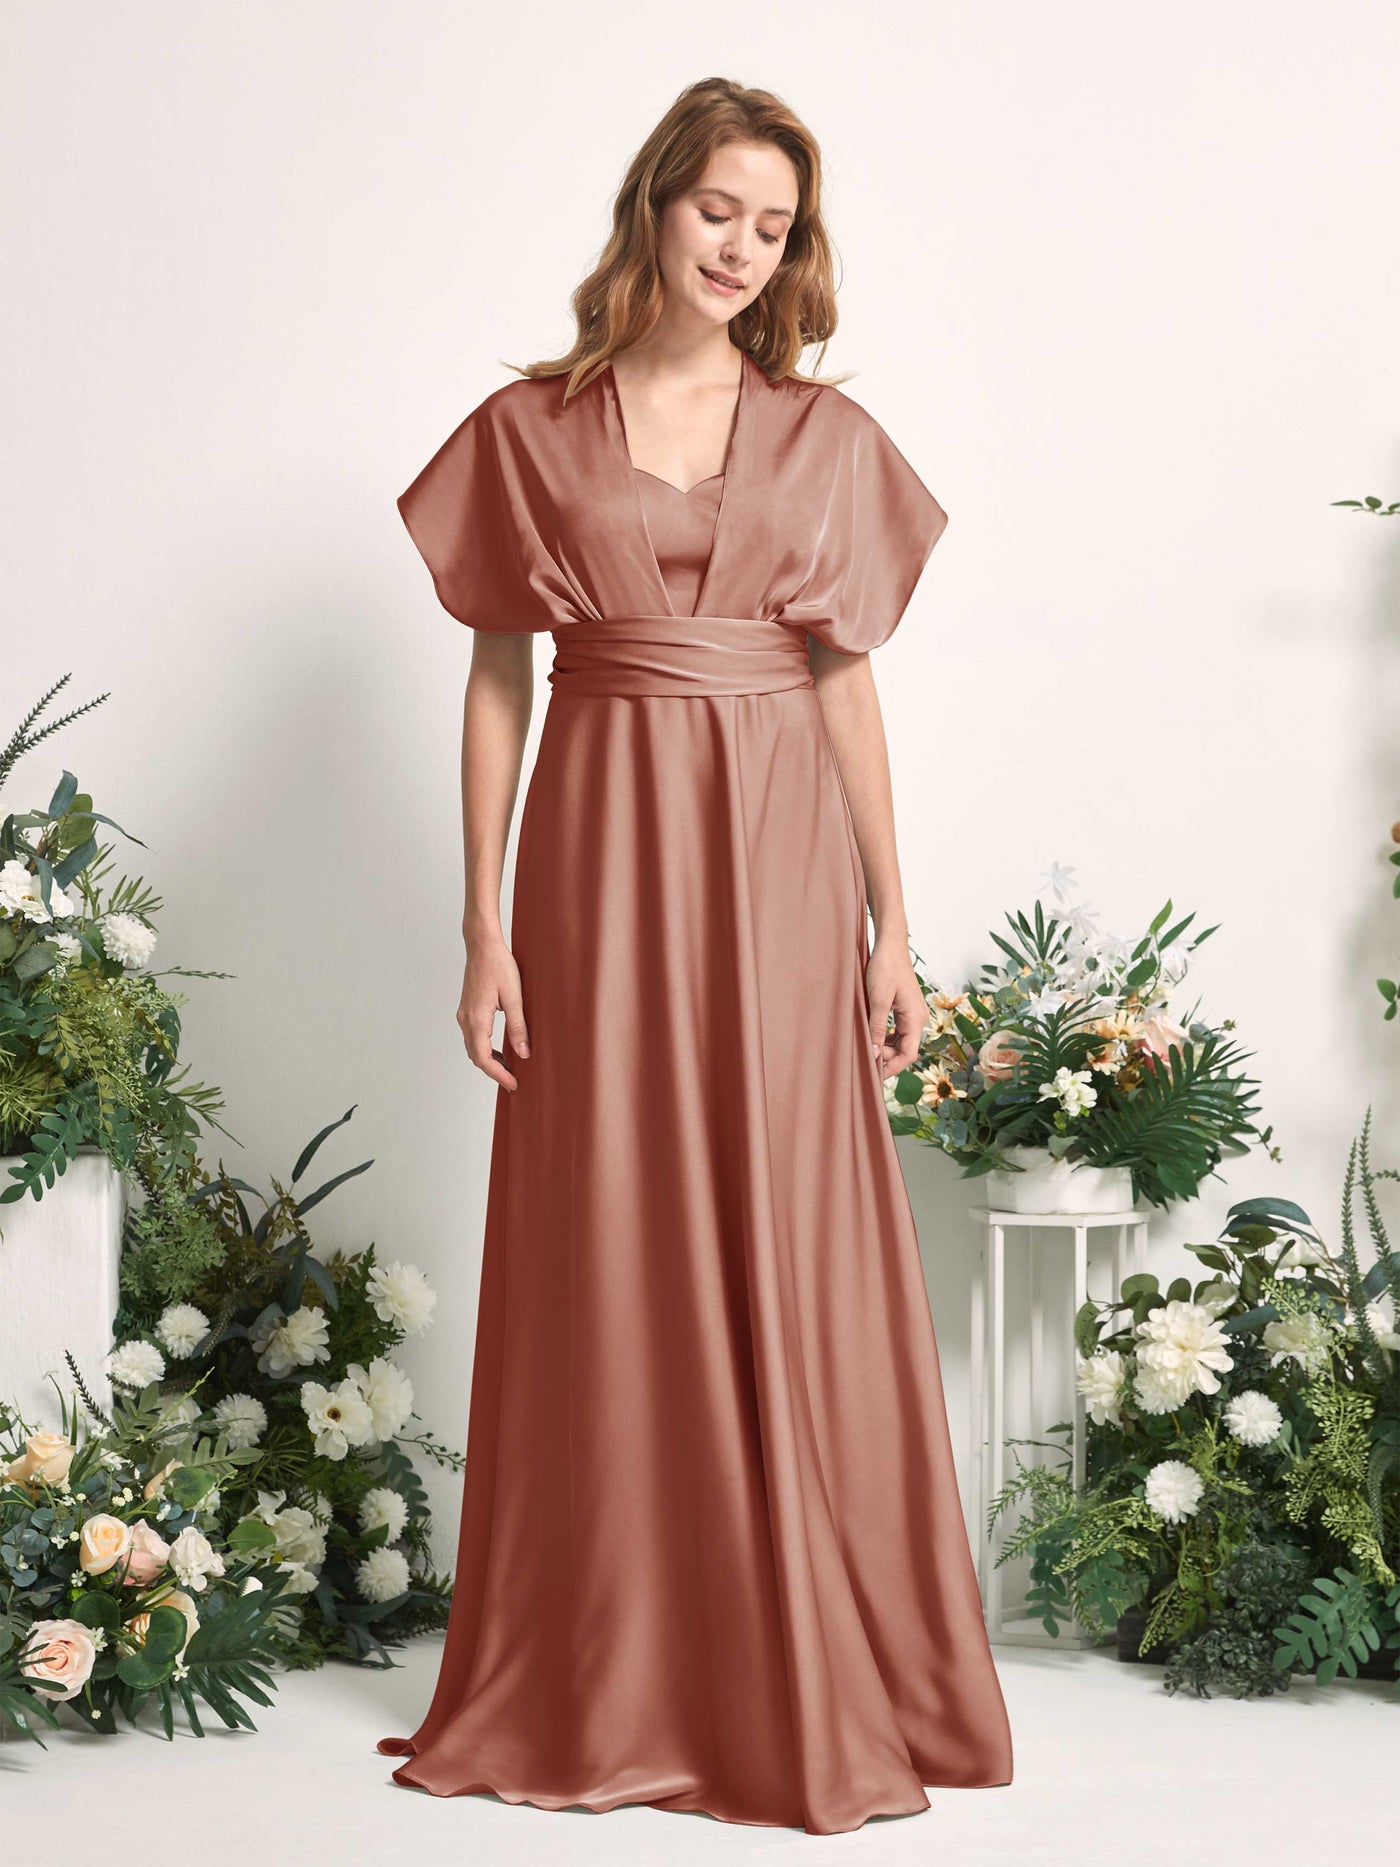 Raw Sienna Bridesmaid Dresses Bridesmaid Dress A-line Satin Halter Full Length Short Sleeves Wedding Party Dress (81226415)#color_raw-sienna